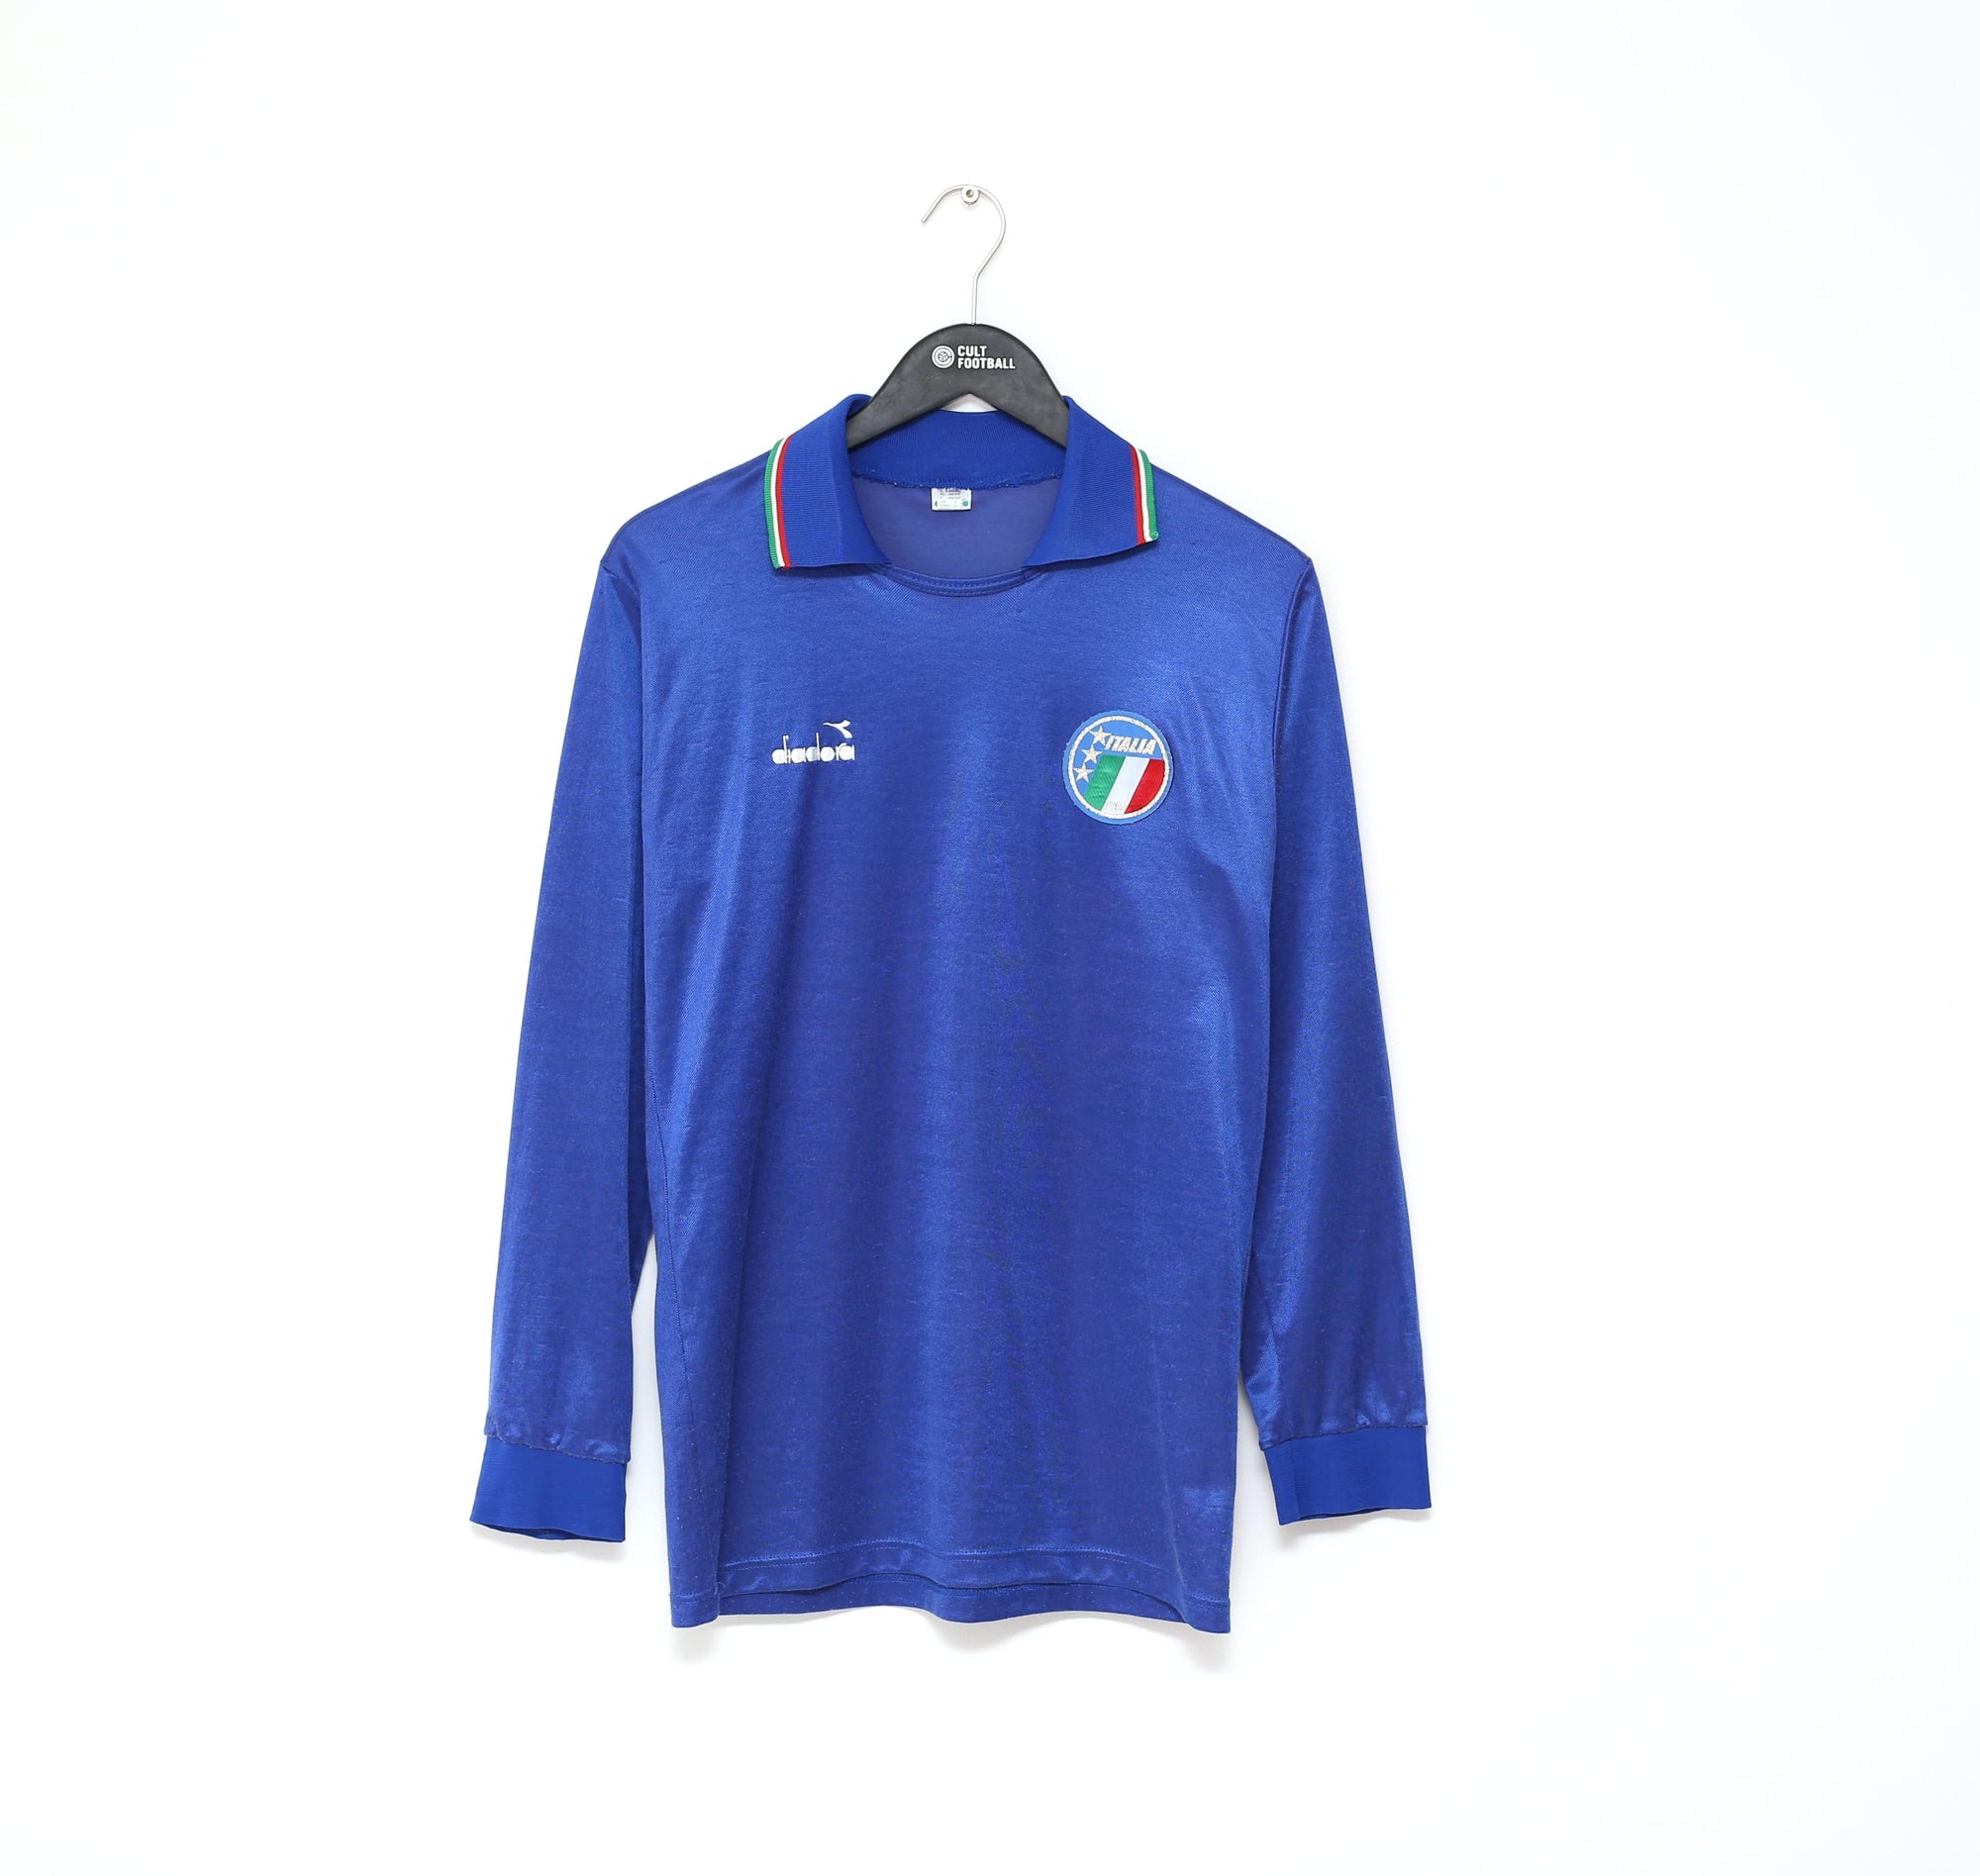 1986/90 ITALY Vintage Diadora Football Shirt Jersey (S/M) Maldini, Baggio Era